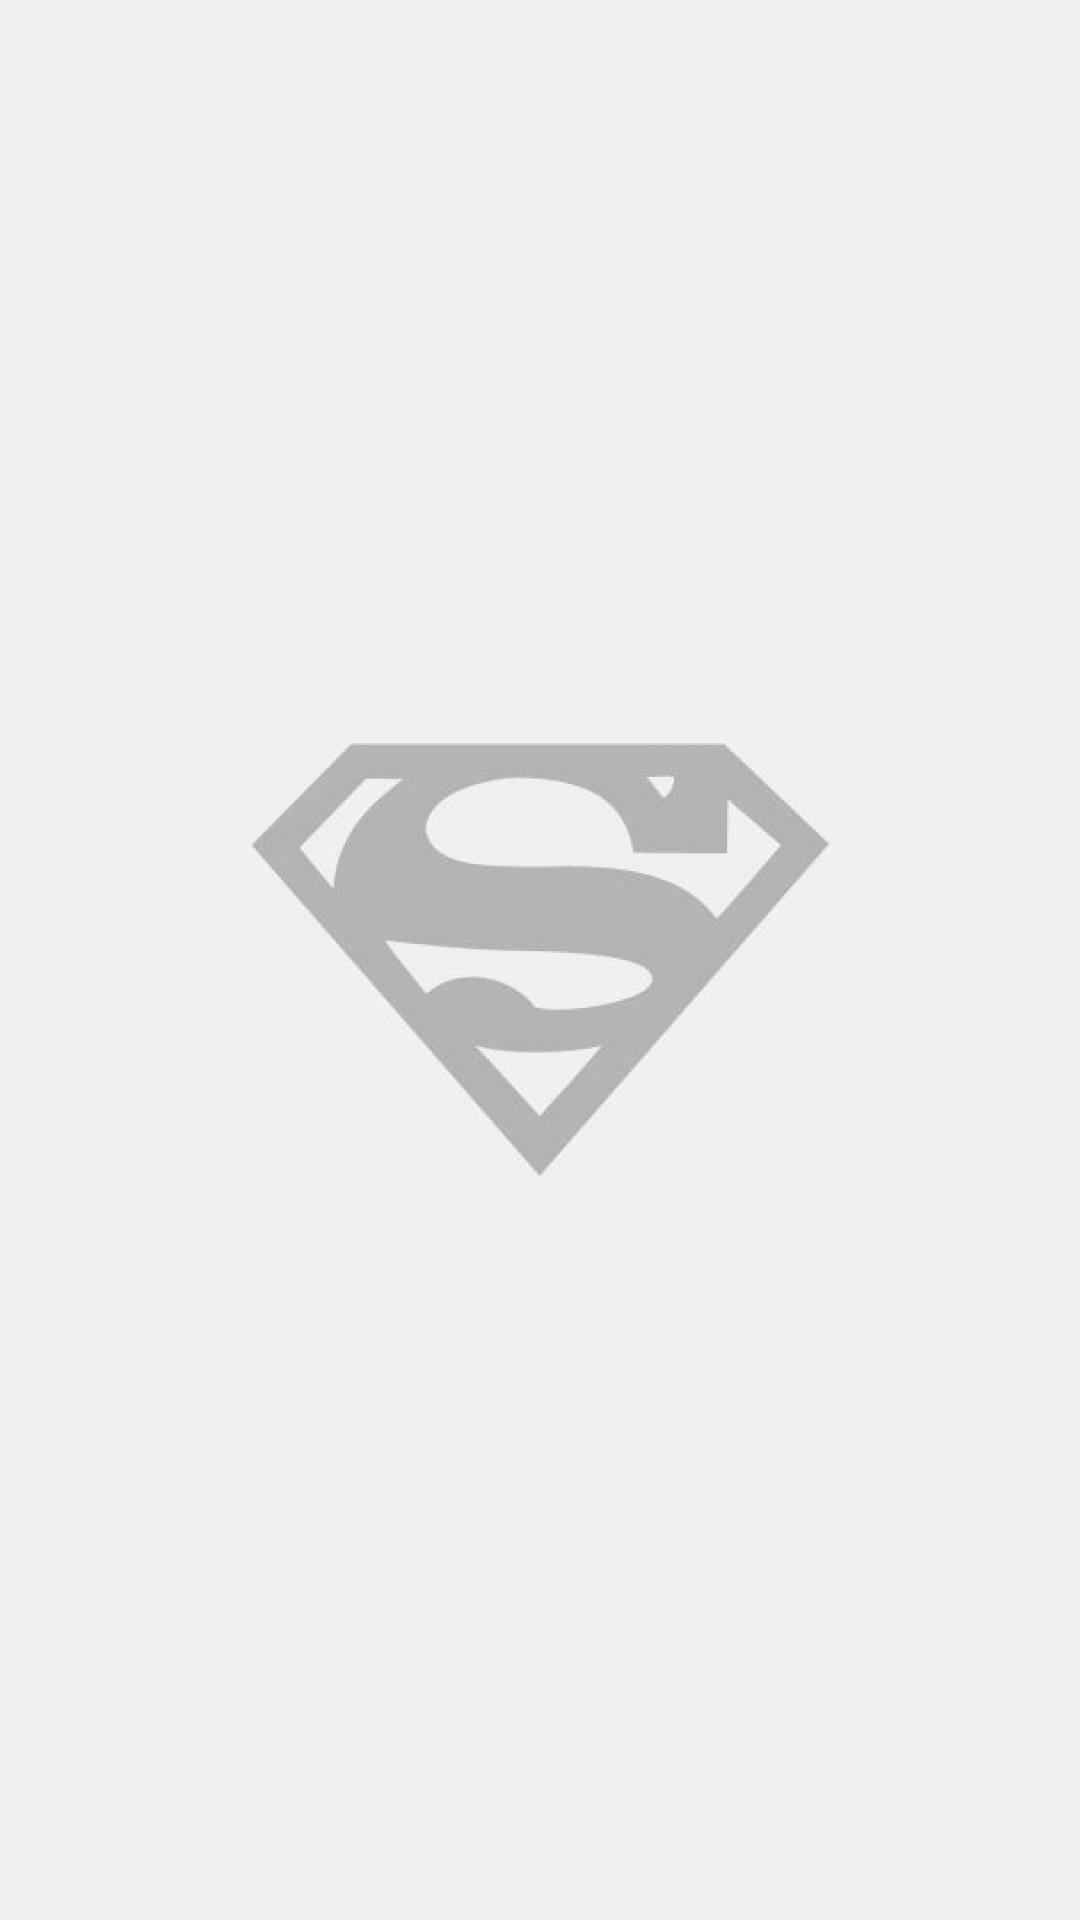 Superman Sticker HD Wallpaper iPhone 6 / 6S Plus